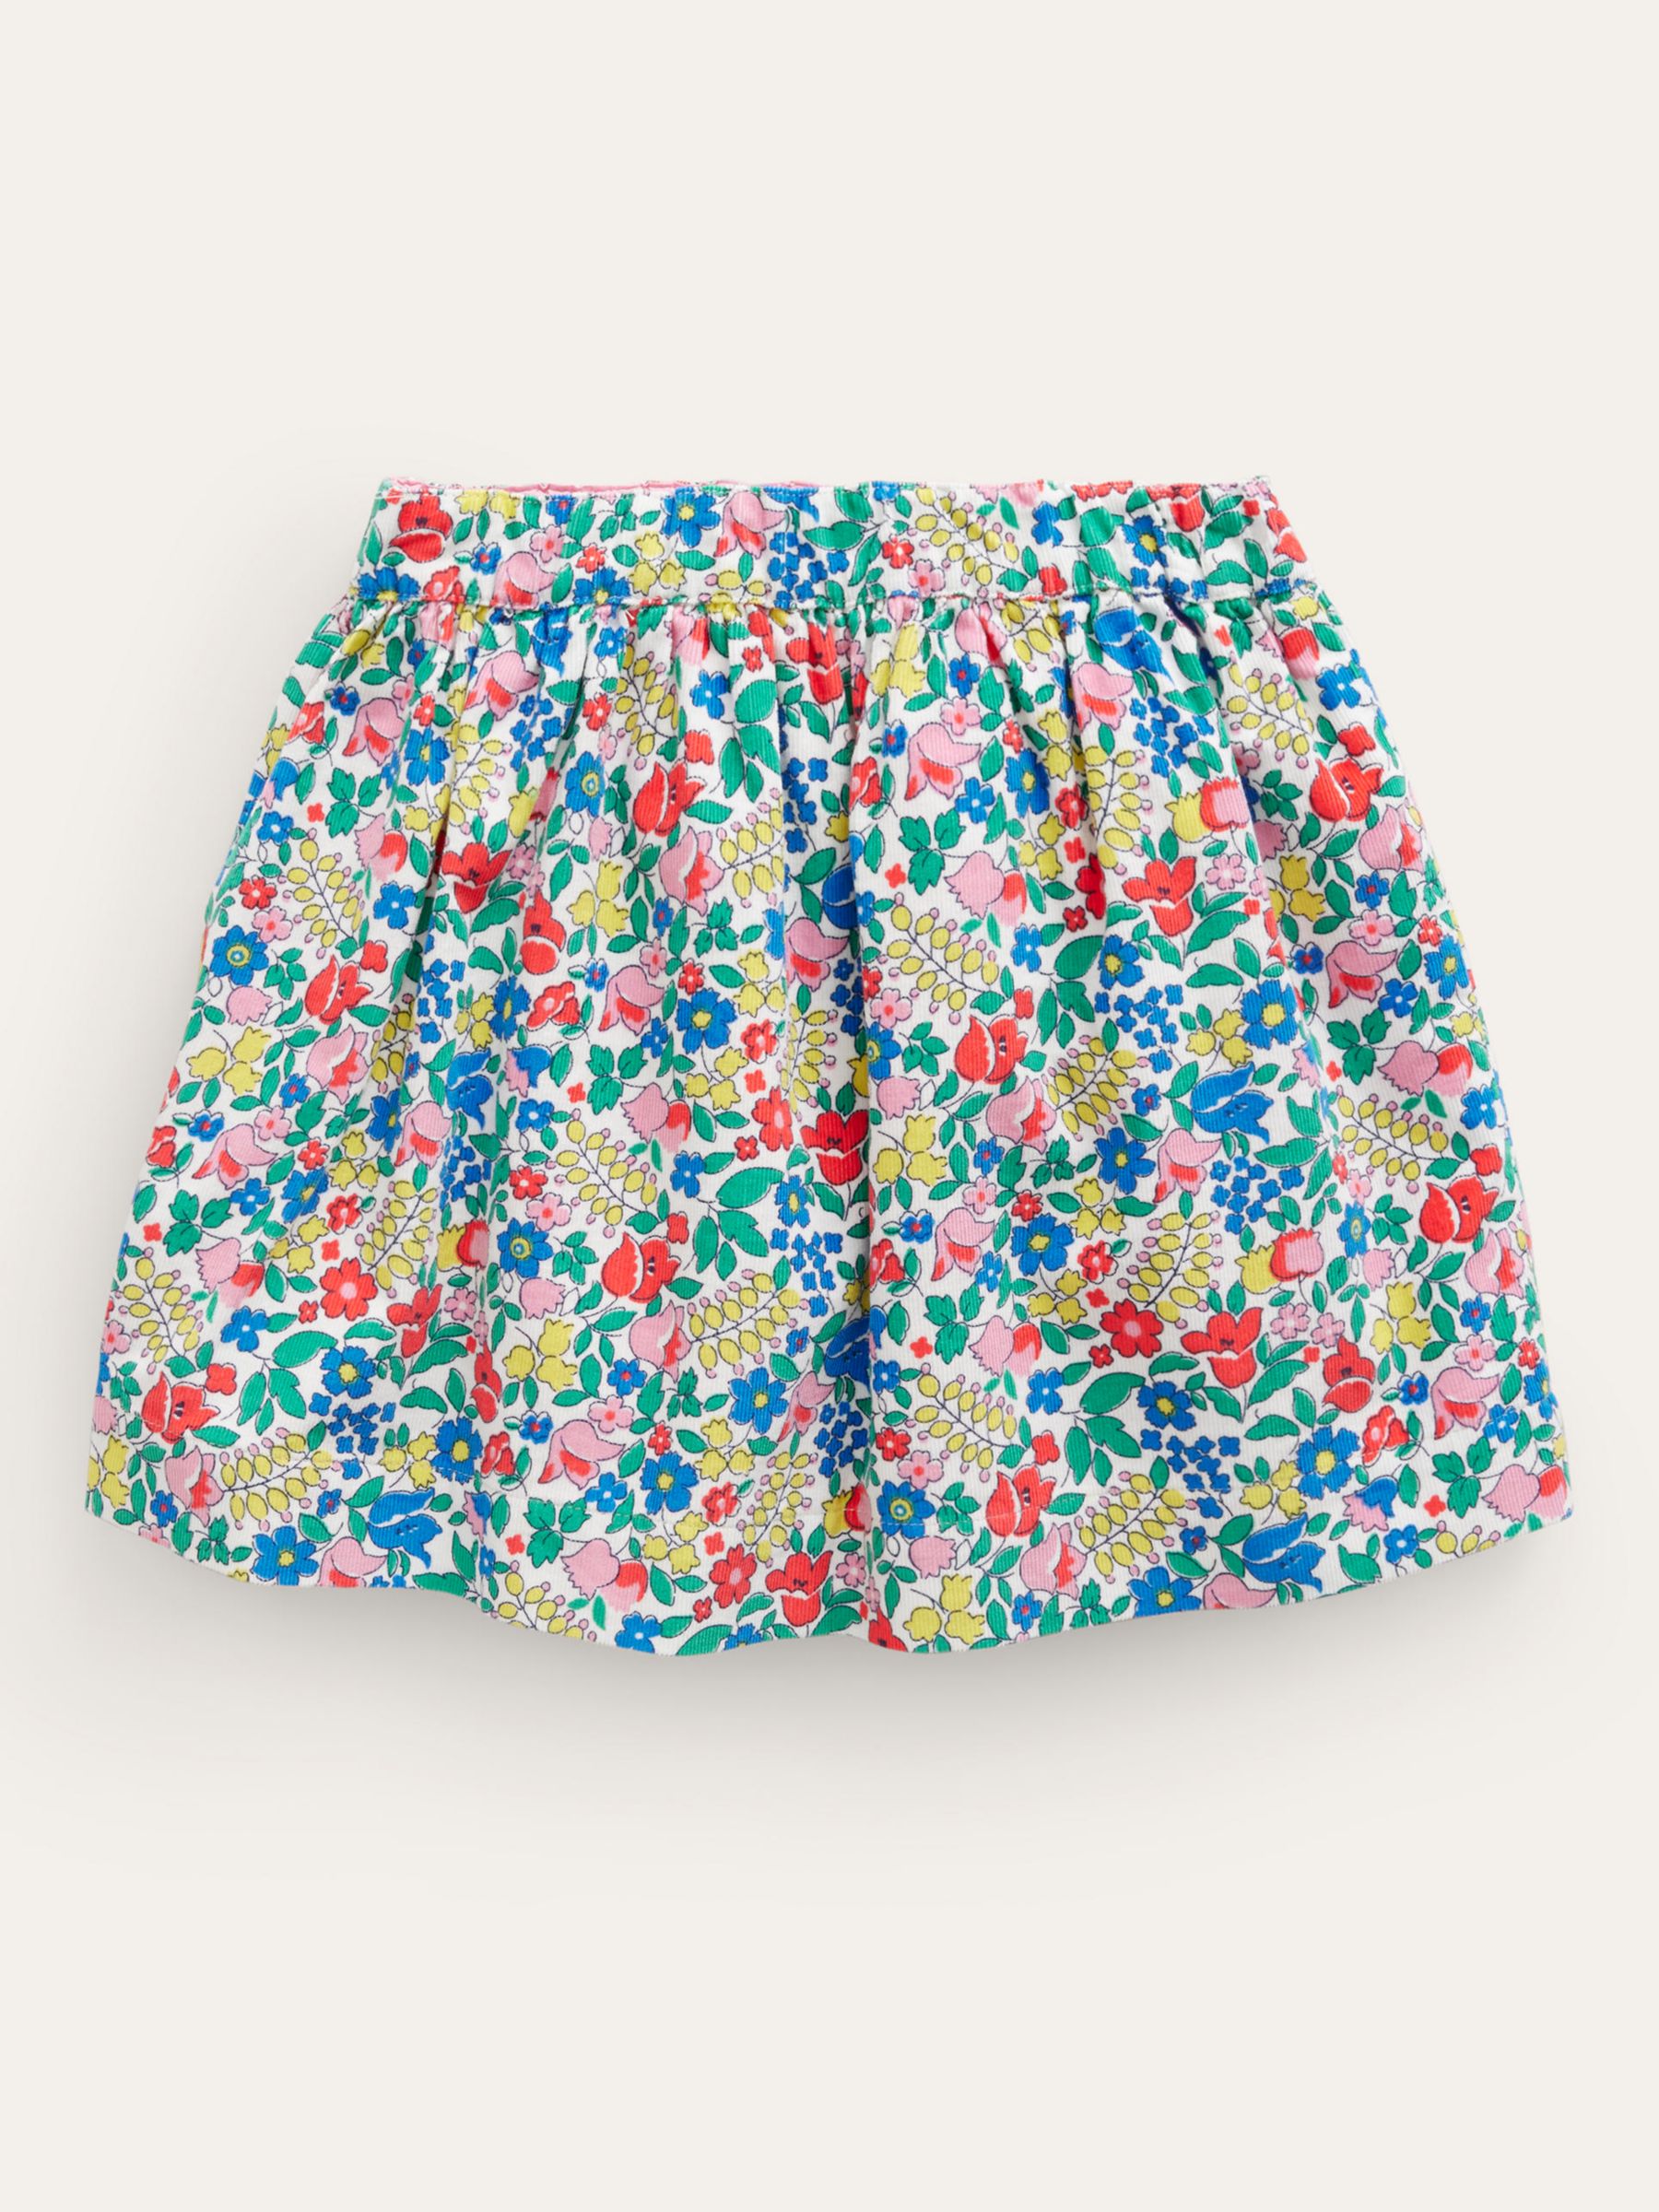 Mini Boden Kids' Floral Cord Twirly Mini Skirt, Multi, 8-9 years